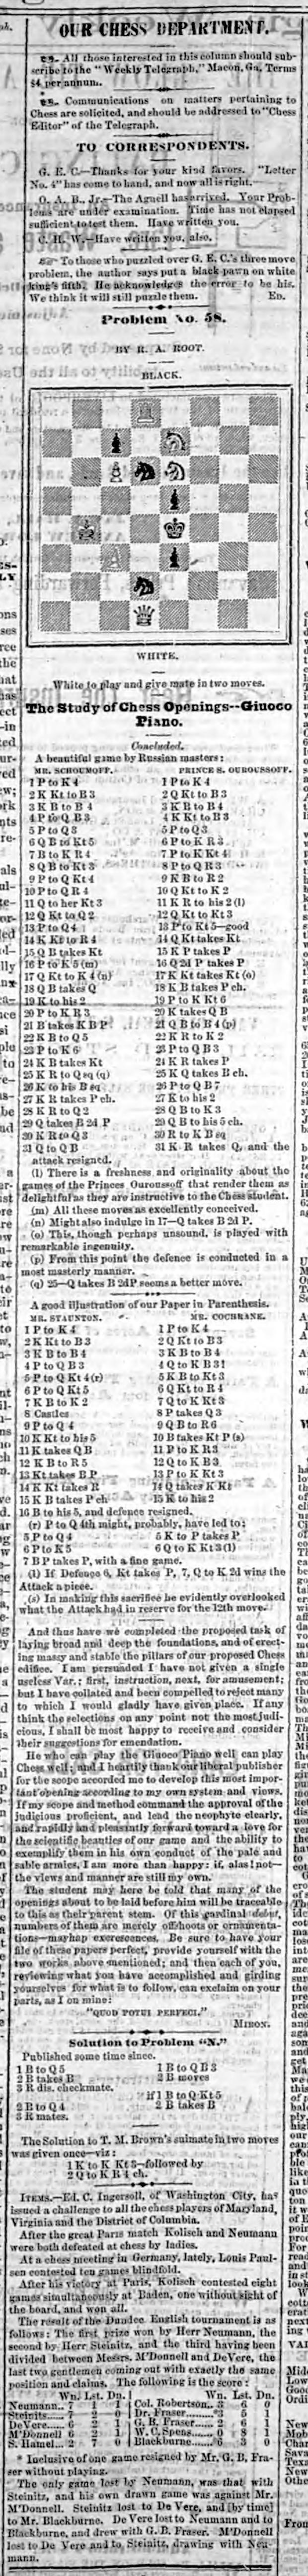 1867.10.18-01 Macon Georgia Weekly Telegraph.jpg